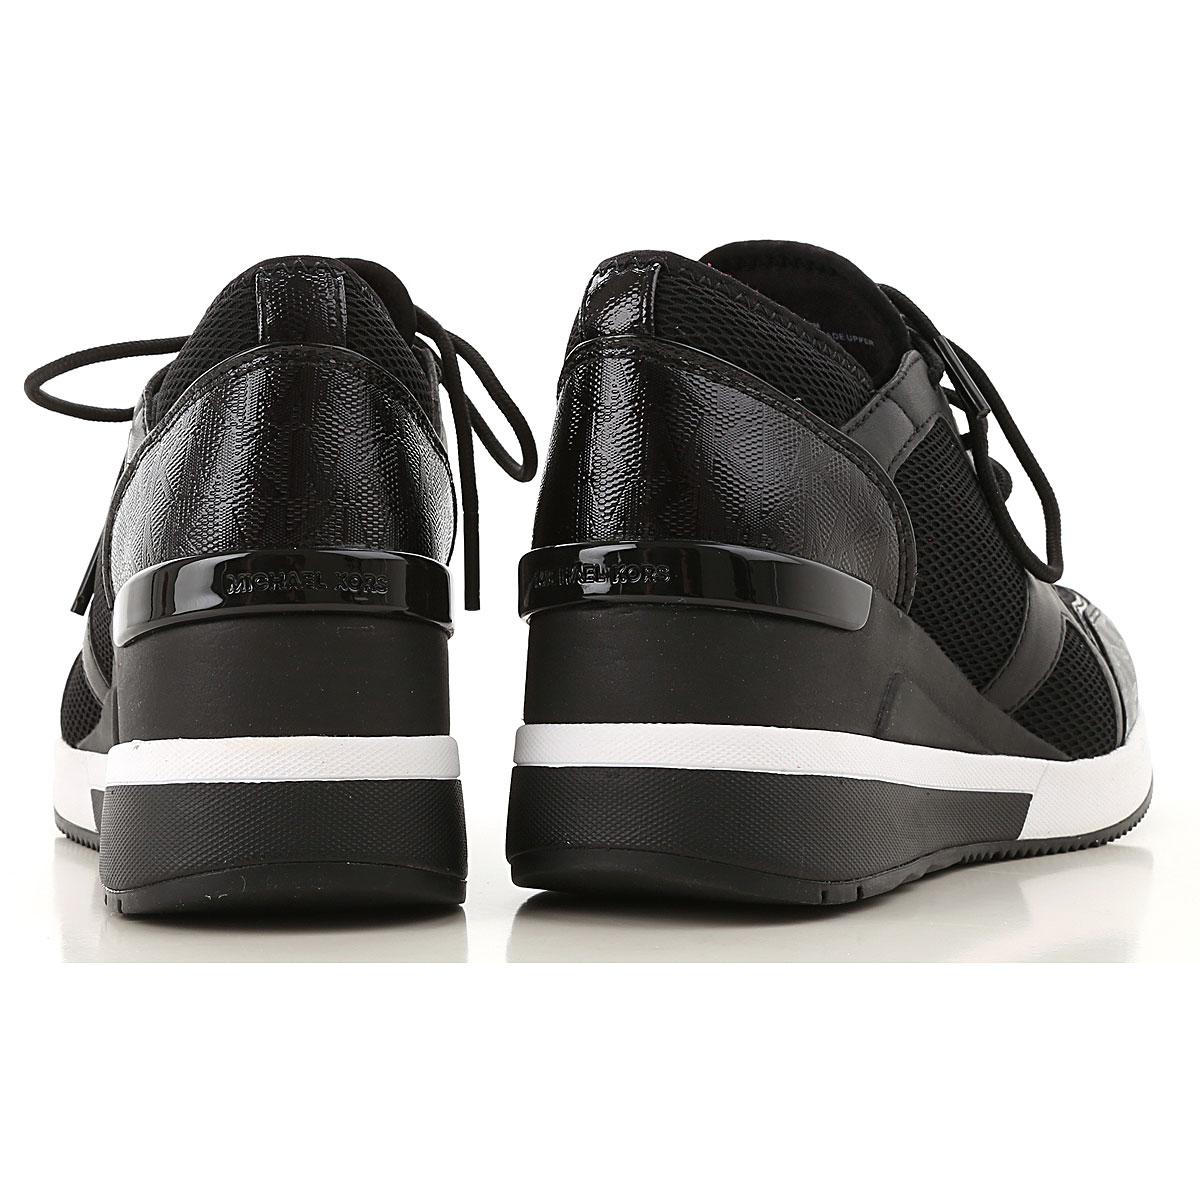 Michael Kors Sneakers For Women On Sale in Black - Lyst